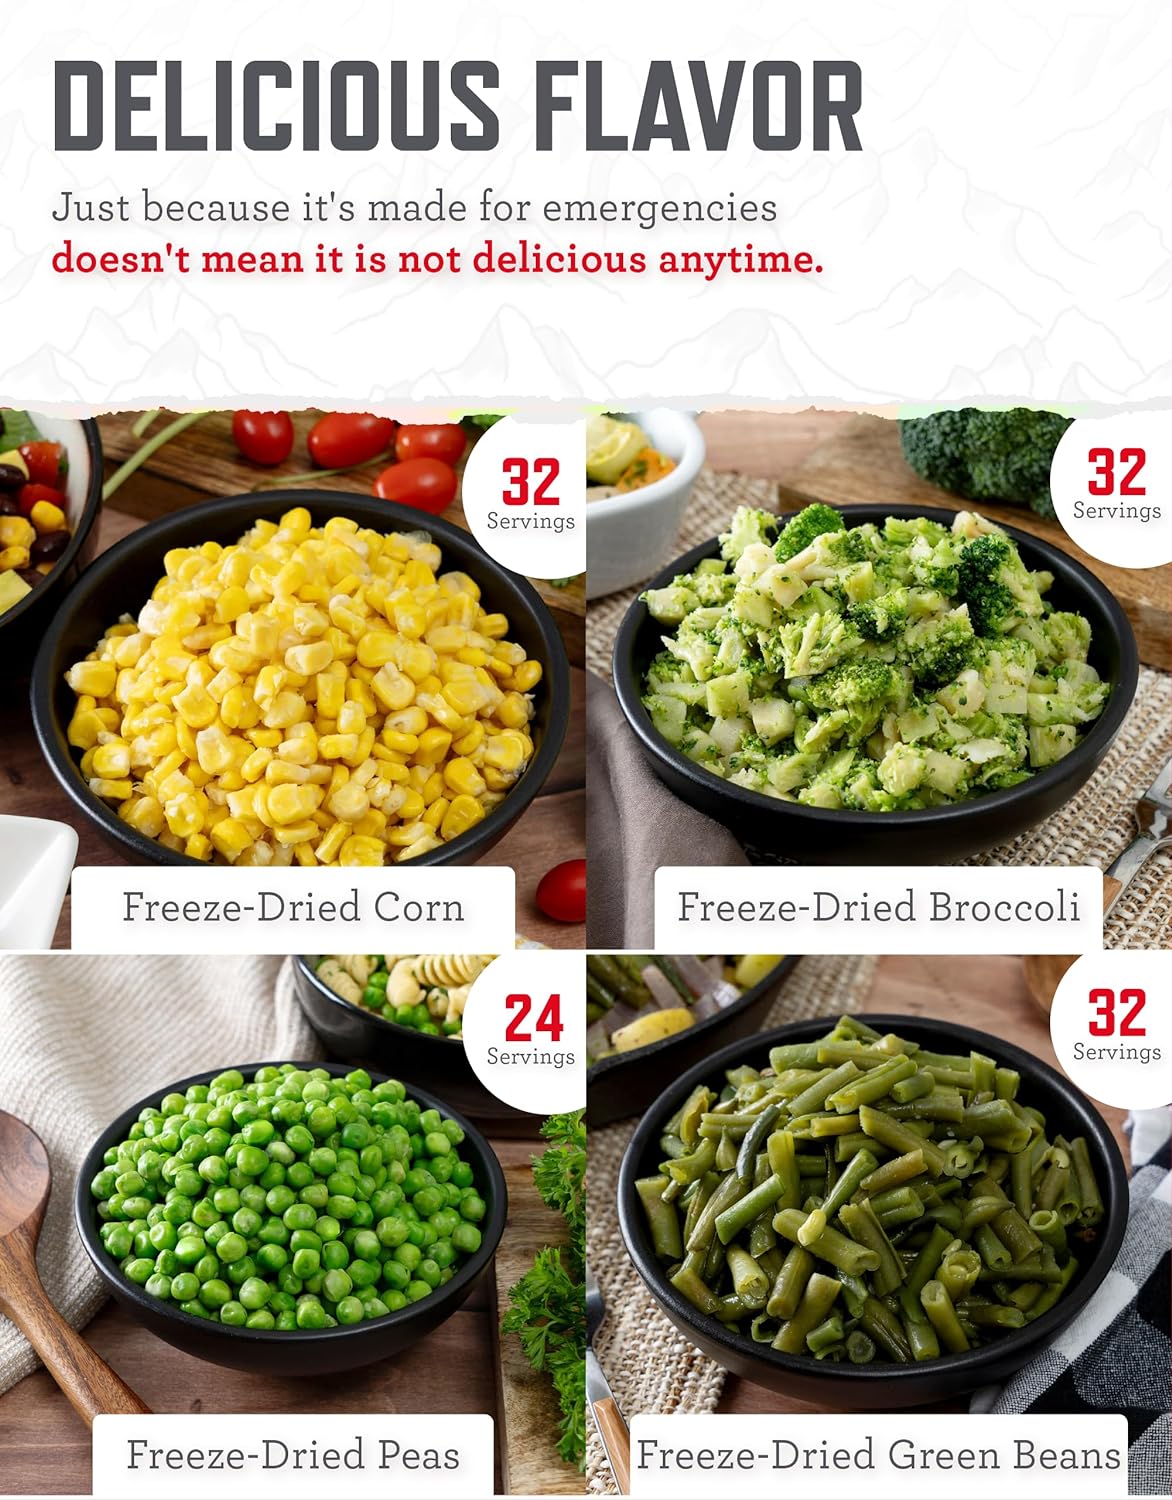  Vegetable Bucket, Broccoli, Sweet Corn, Green Beans, Peas, Freeze Dried, 20 Years Shelf Life, Emergency Food